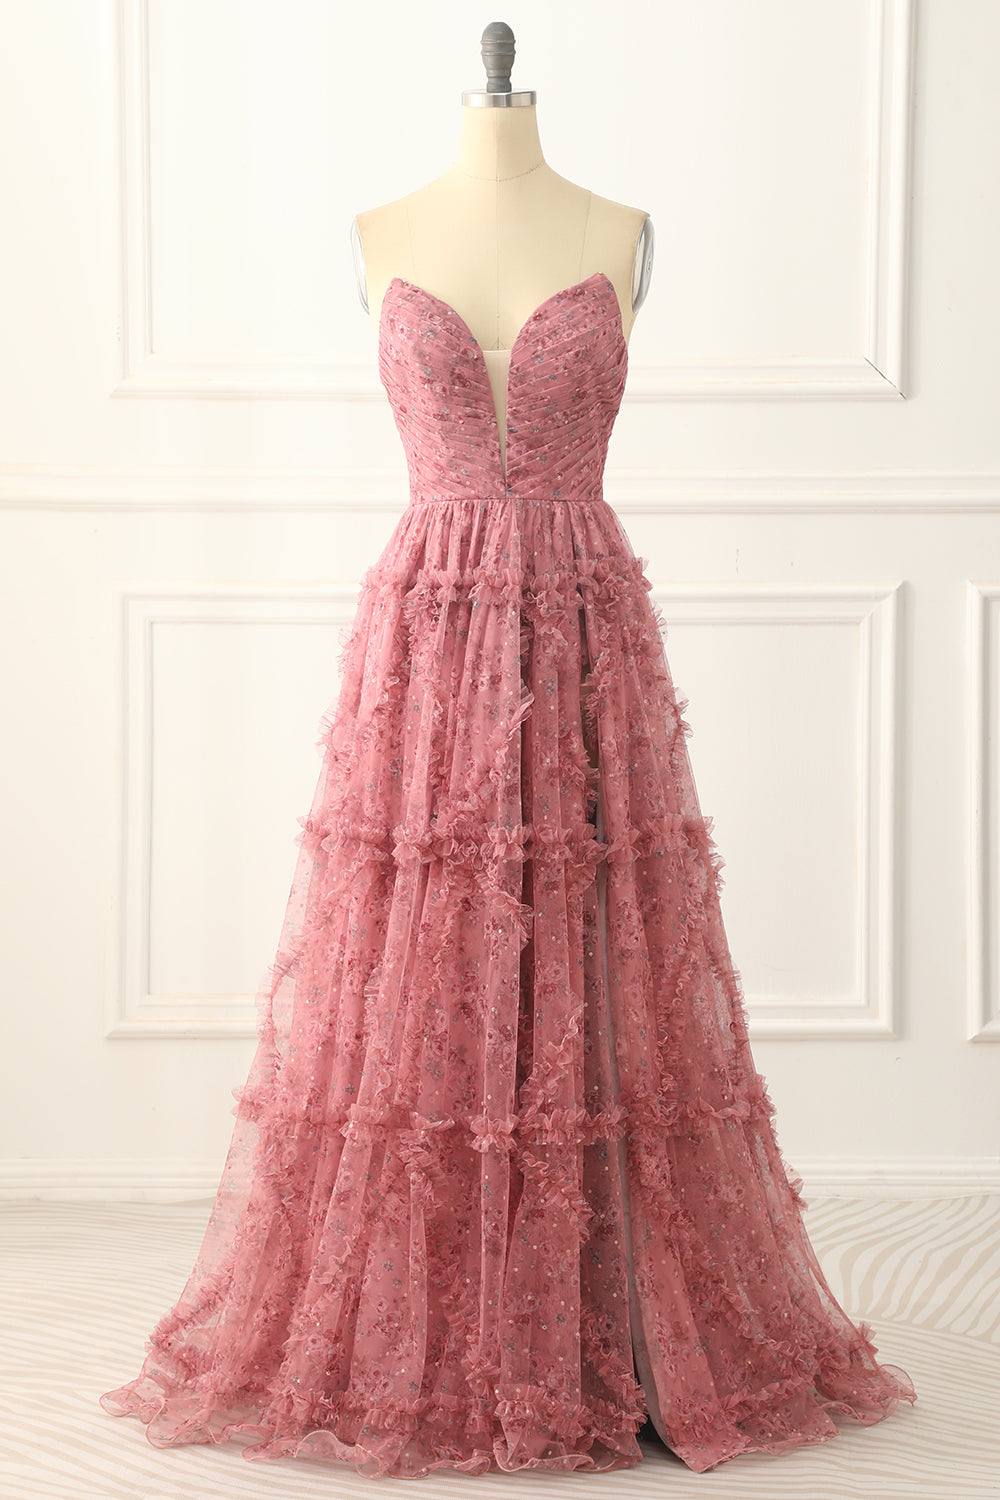 Sequin Dress, Strapless A-line Floral Print Prom Dress